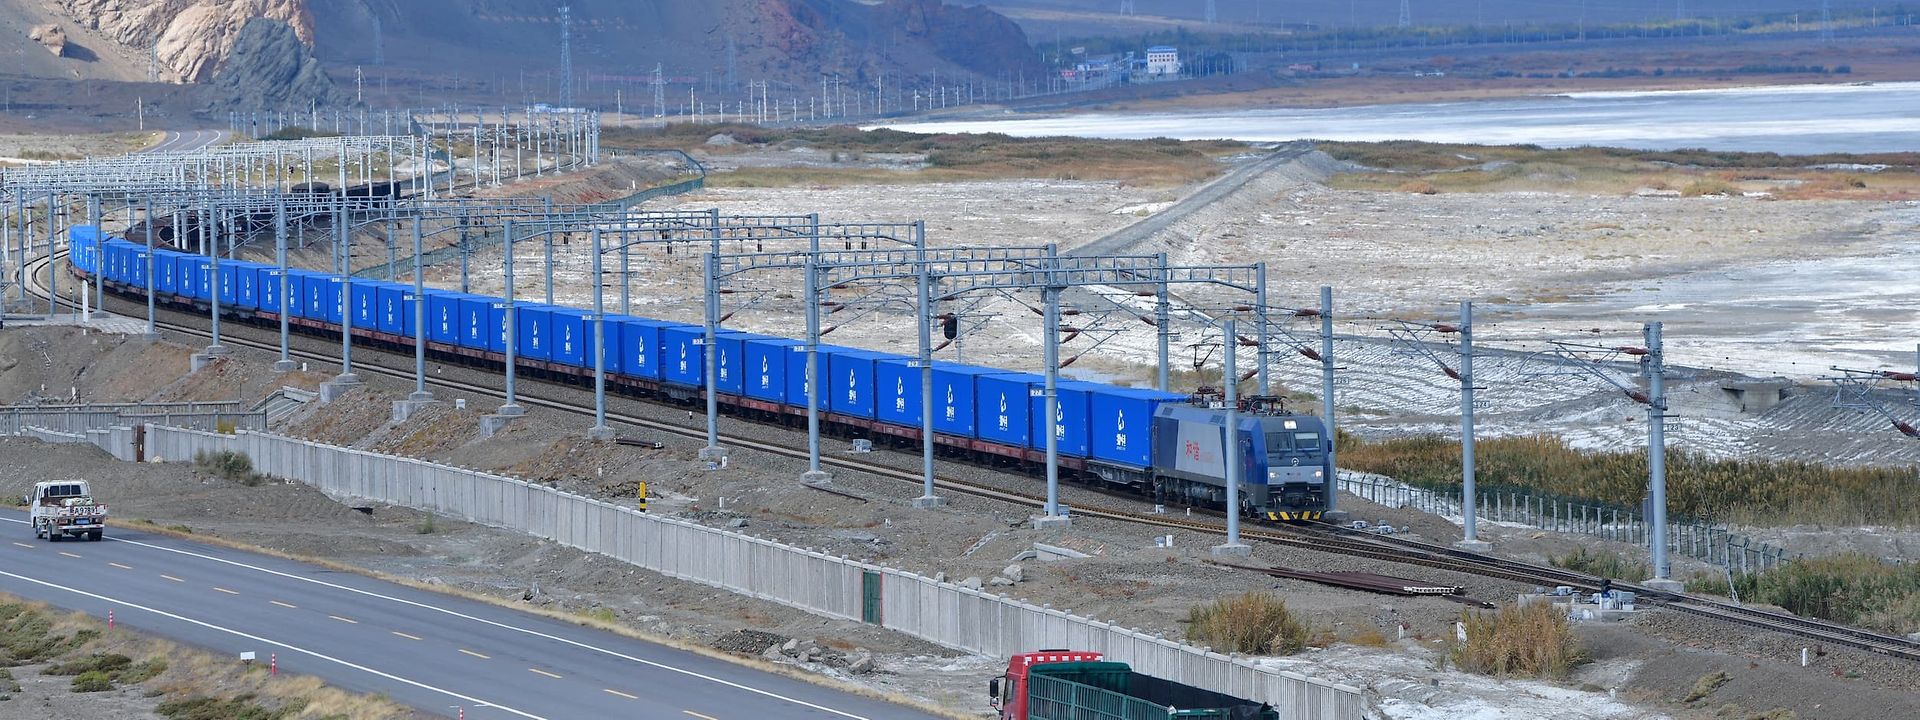 Containerzug in China vor Bergkulisse 